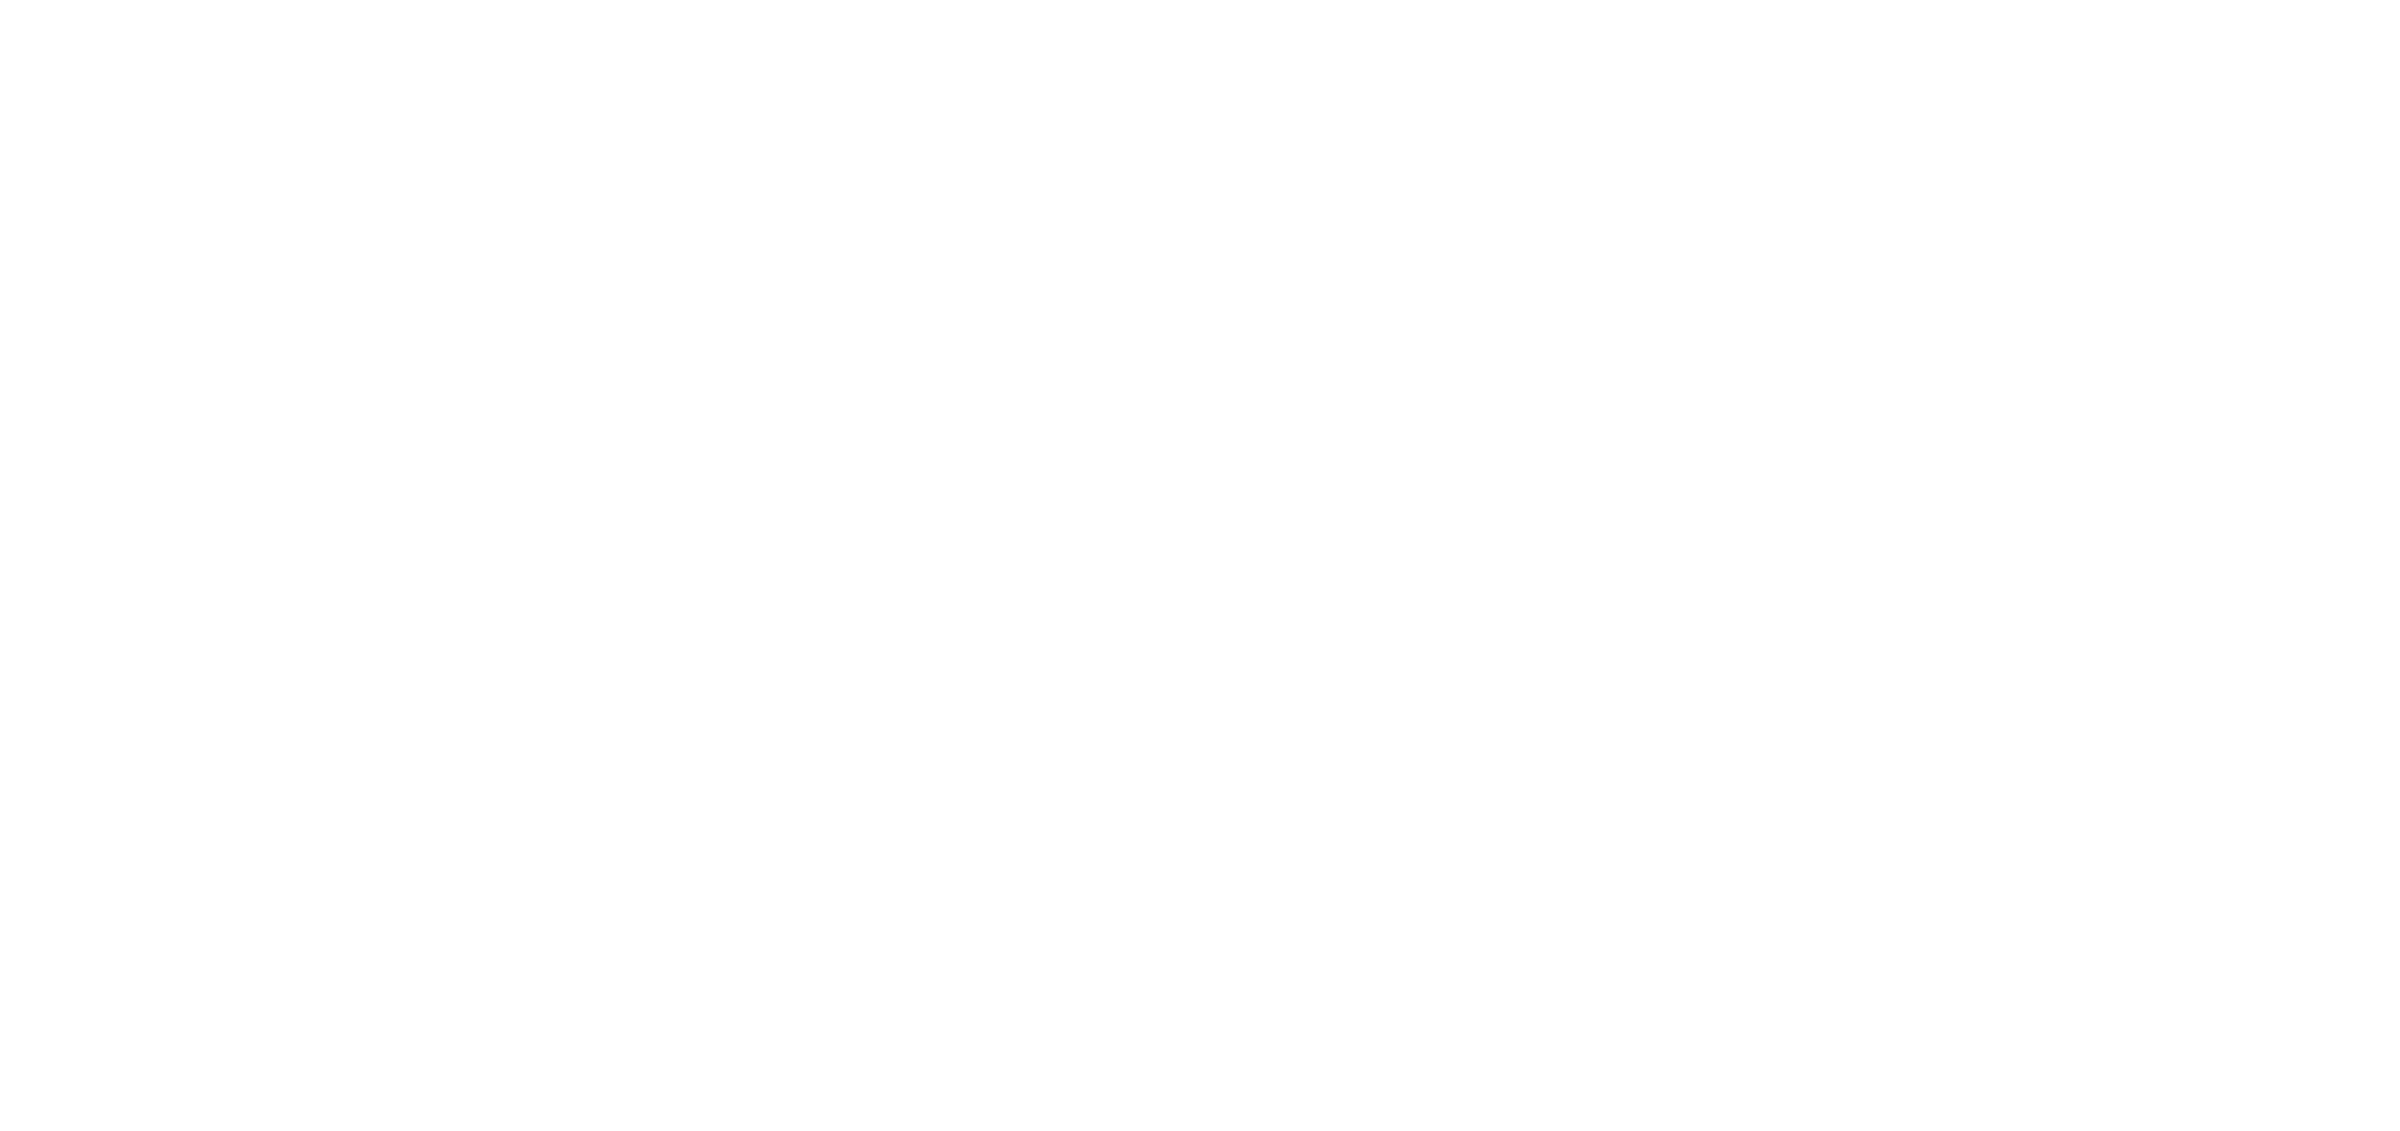 LEGO Ninjago Logo